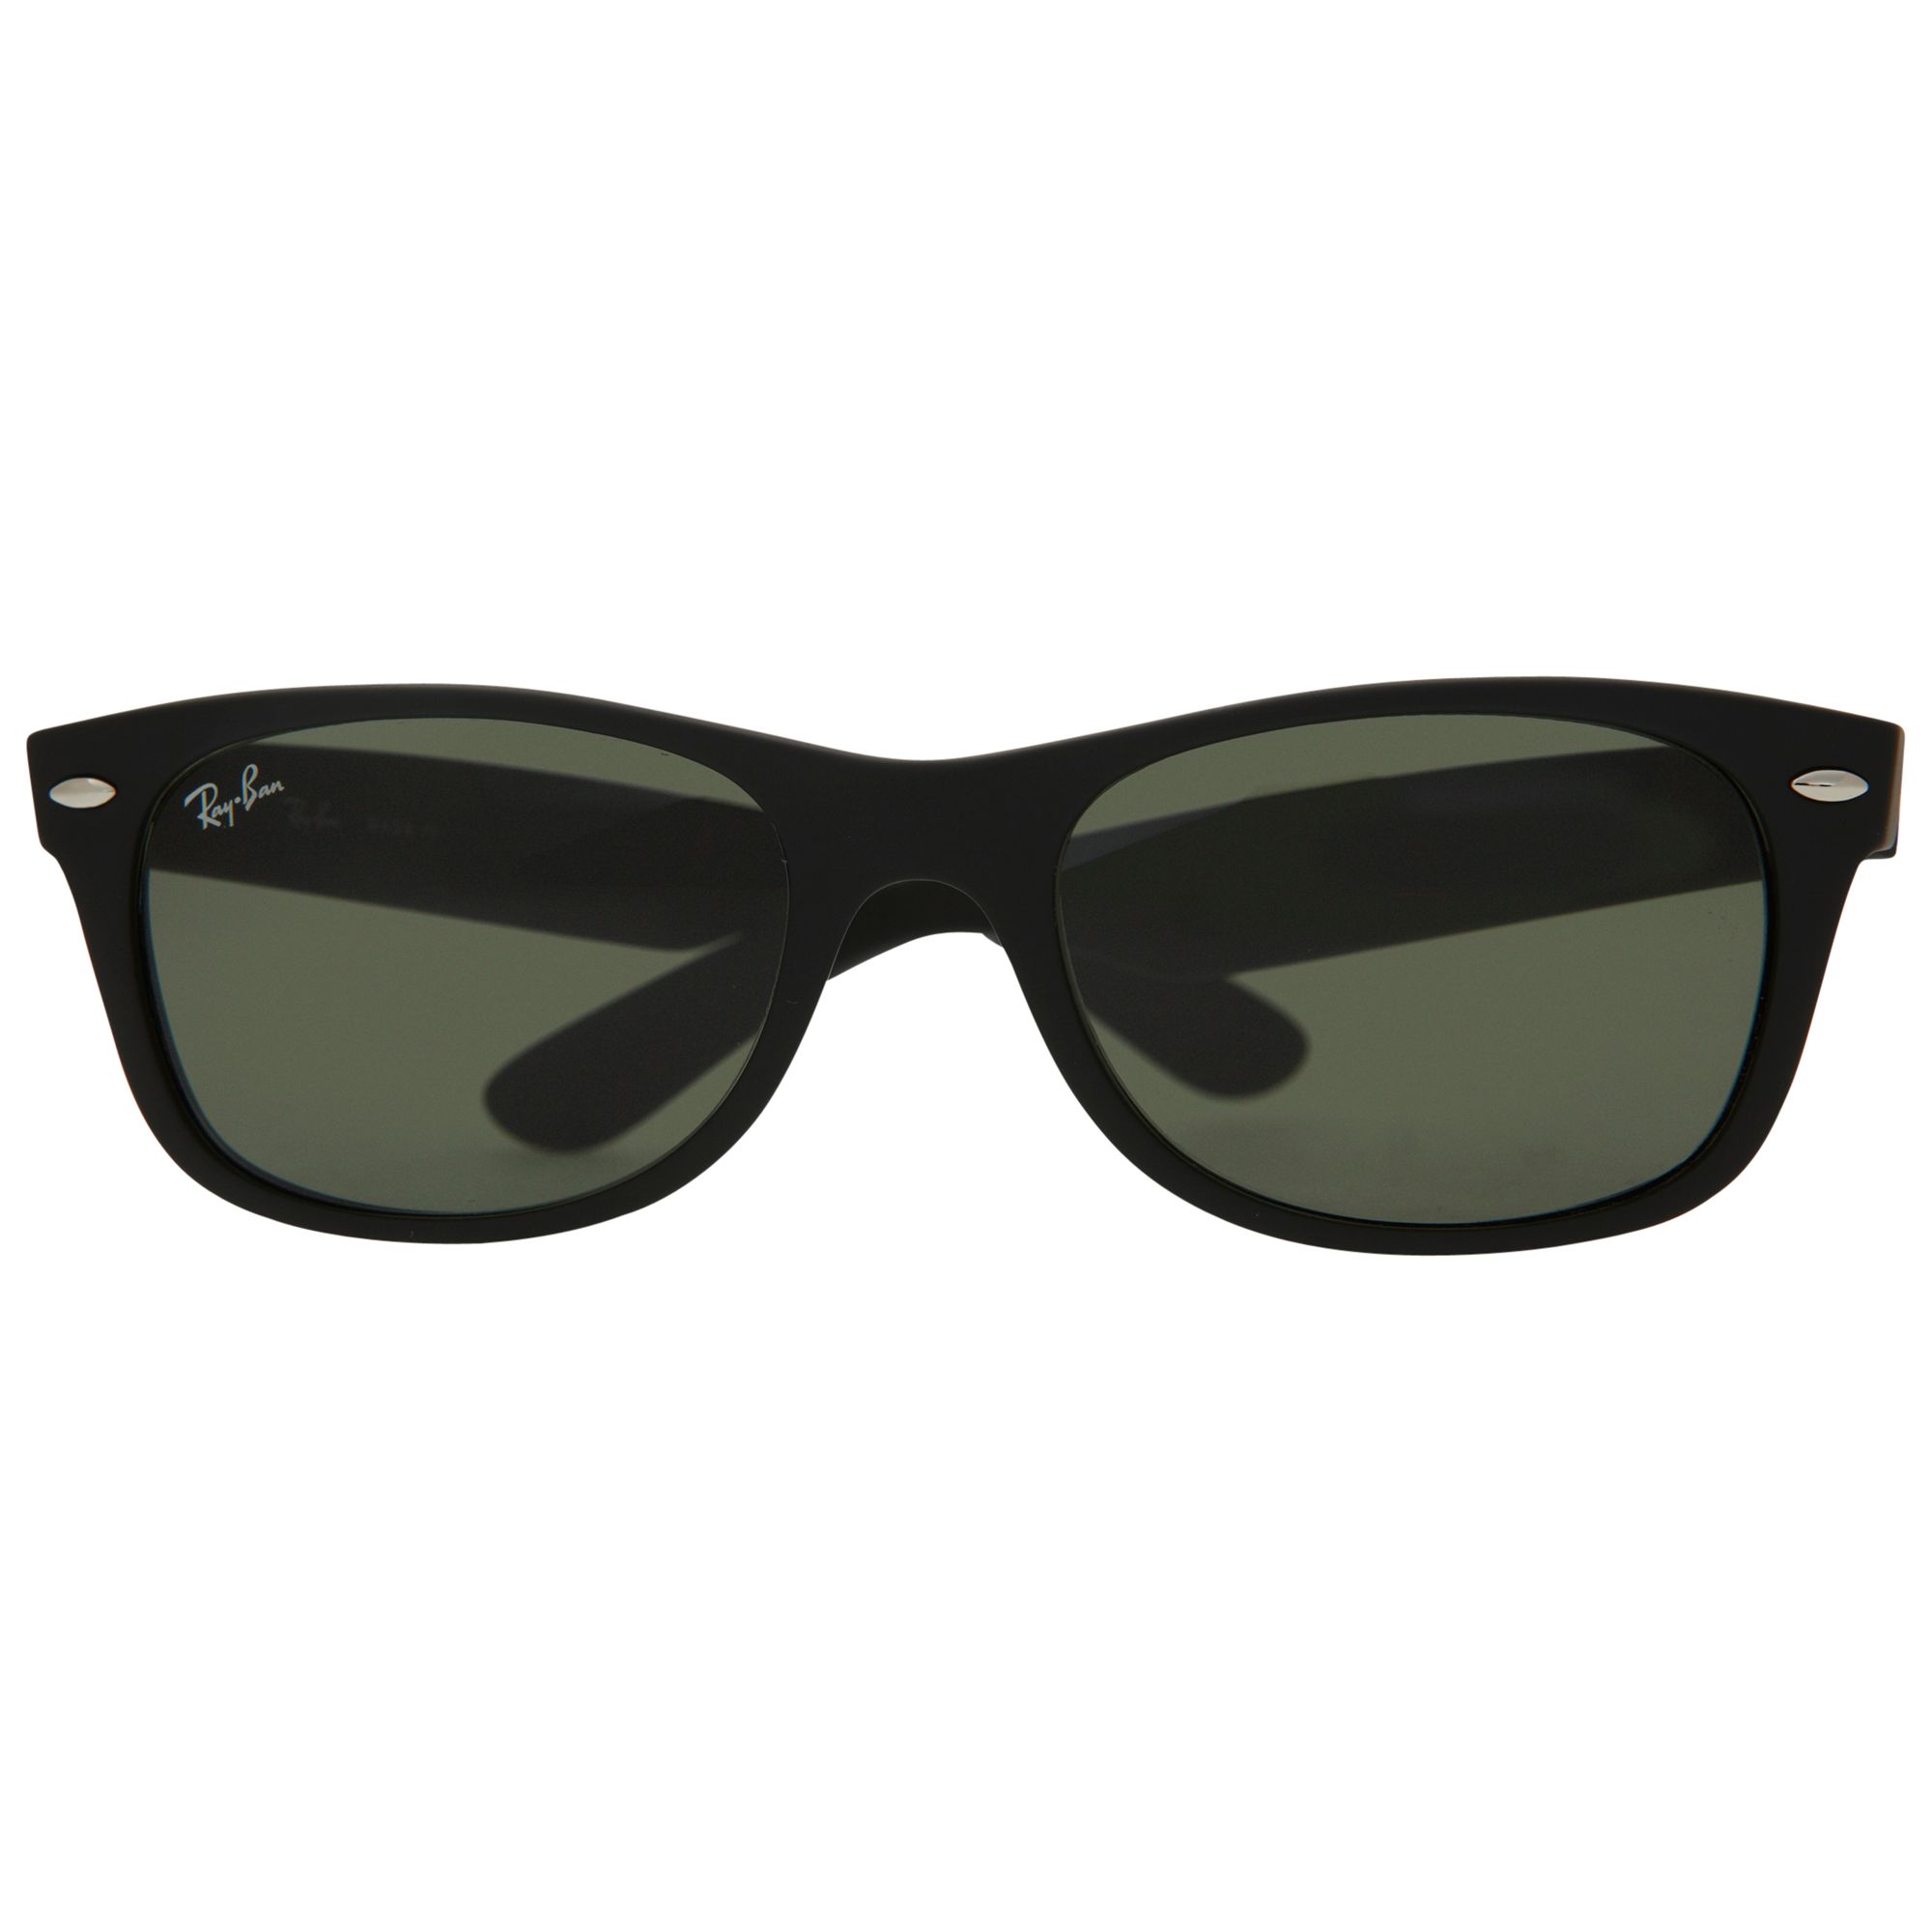 Ray Ban Rb2132 New Wayfarer Sunglasses Matte Black At John Lewis Partners